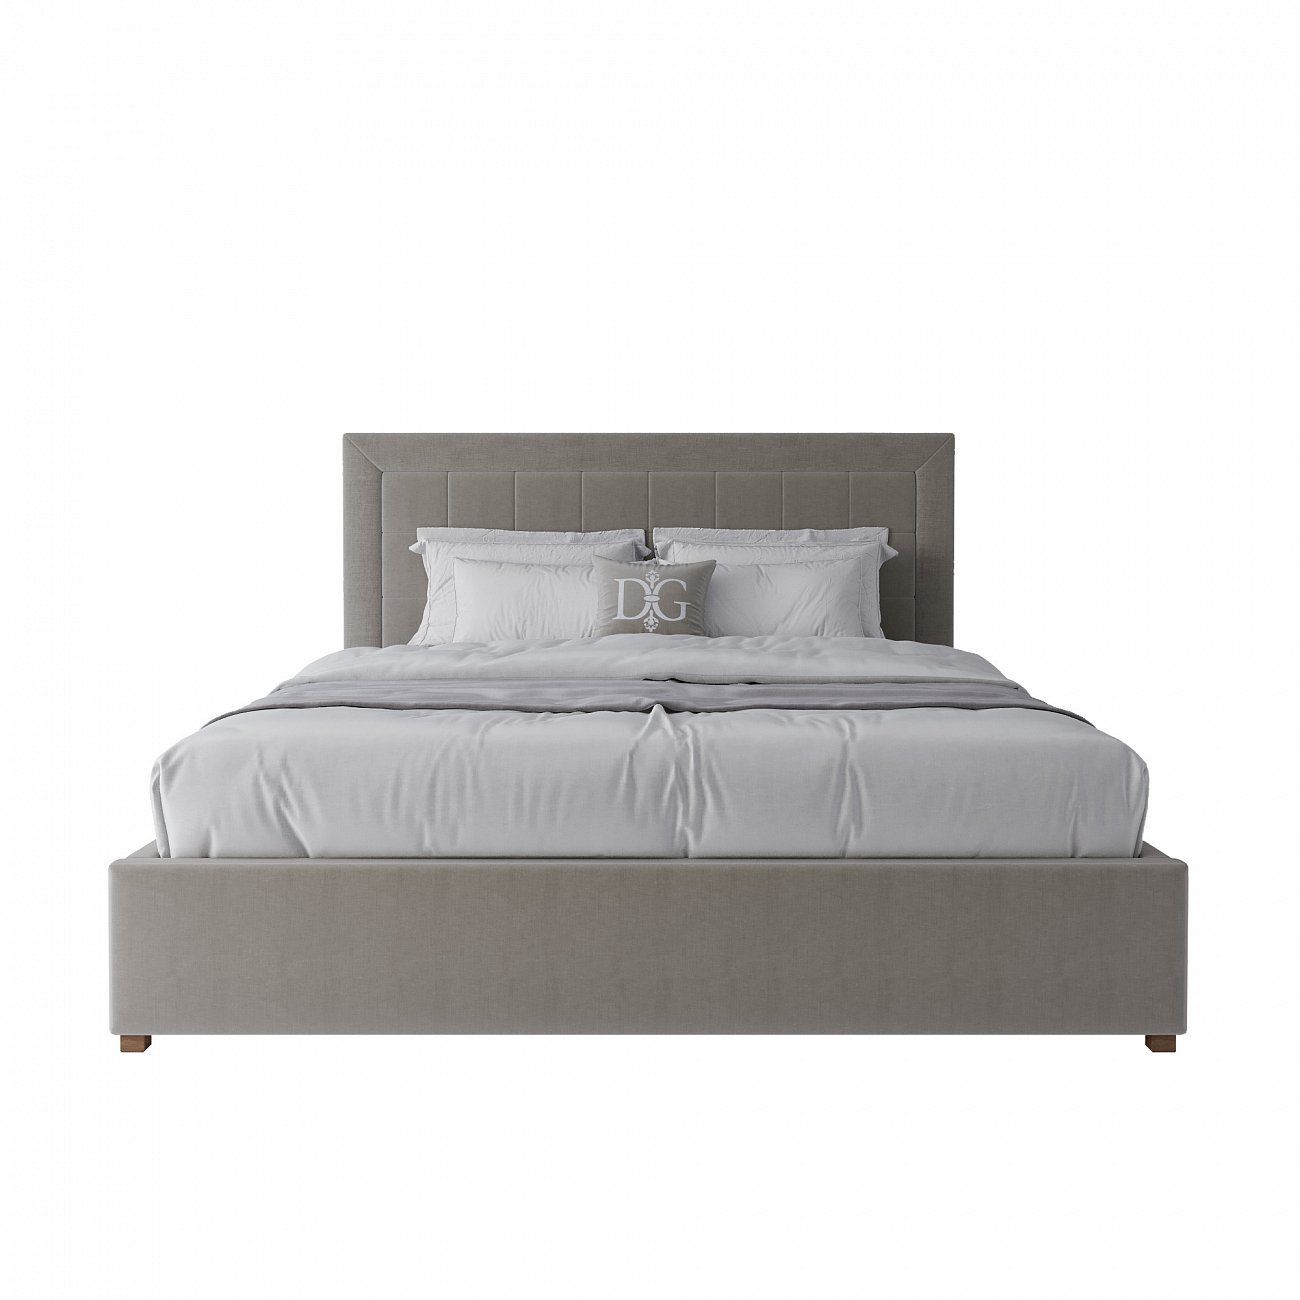 Double bed 180x200 cm brown-gray Elizabeth